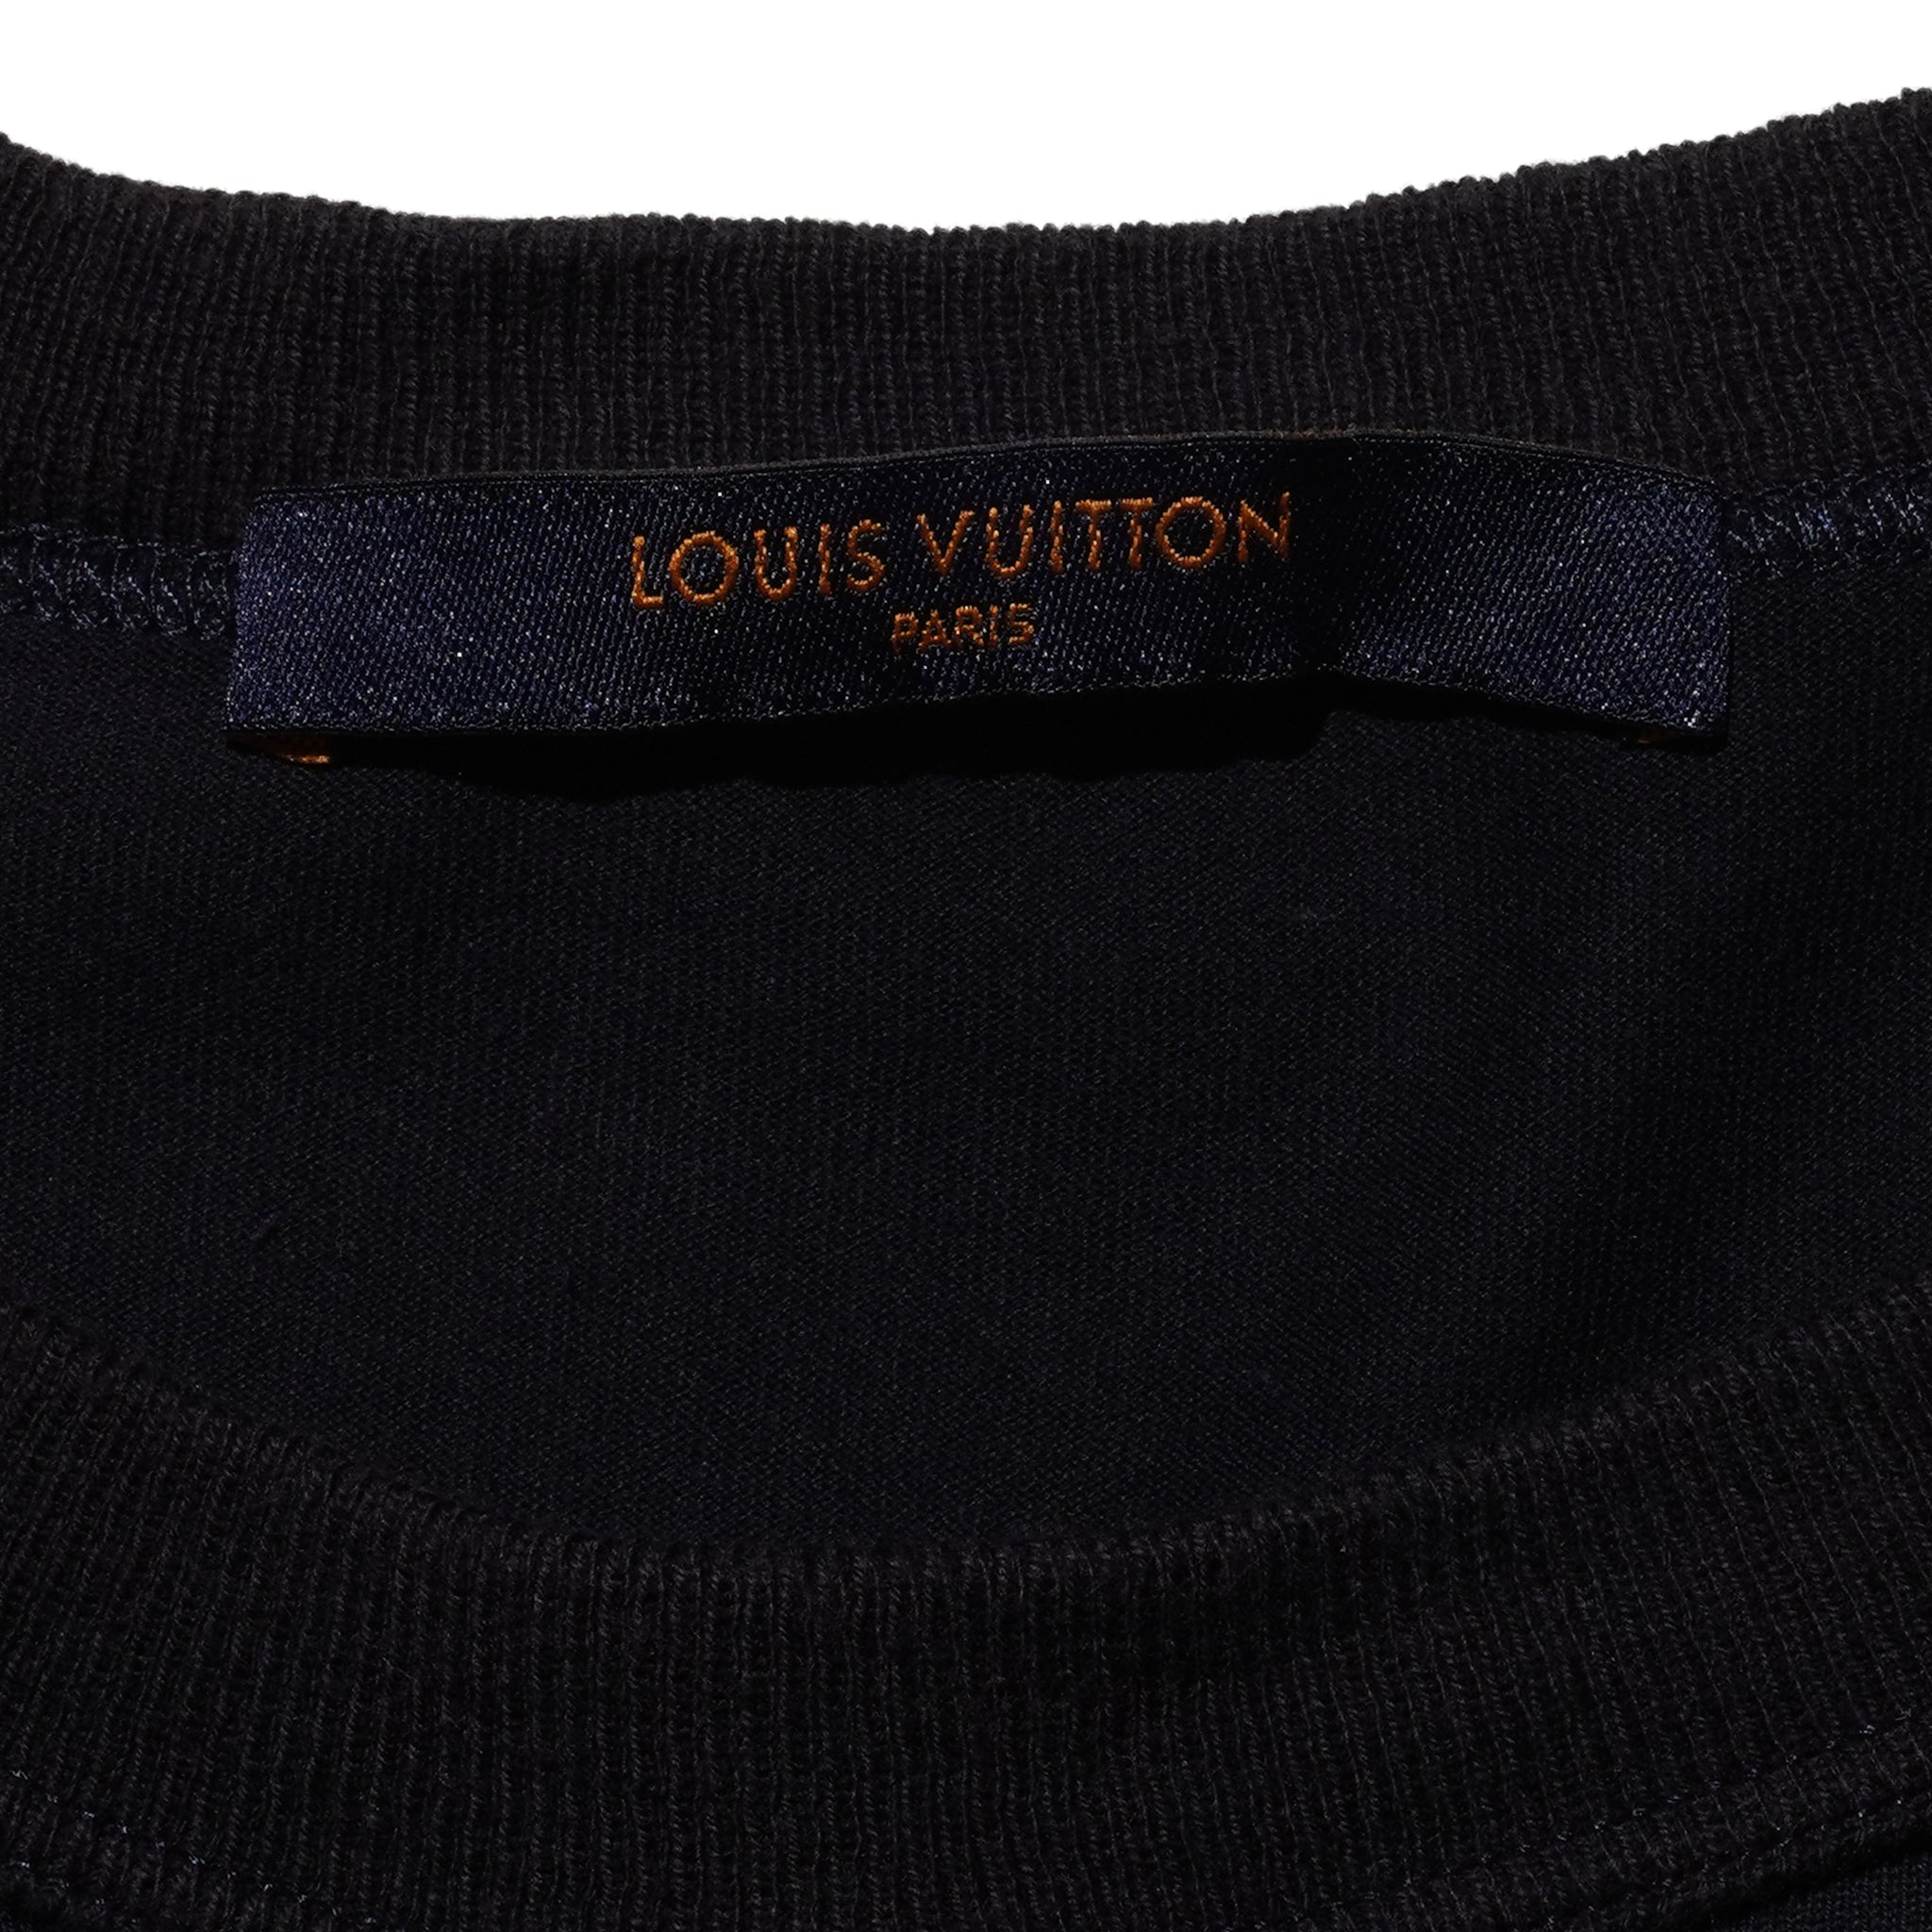 Louis Vuitton White Merci Have A Vuitton Day Oversized Shirt